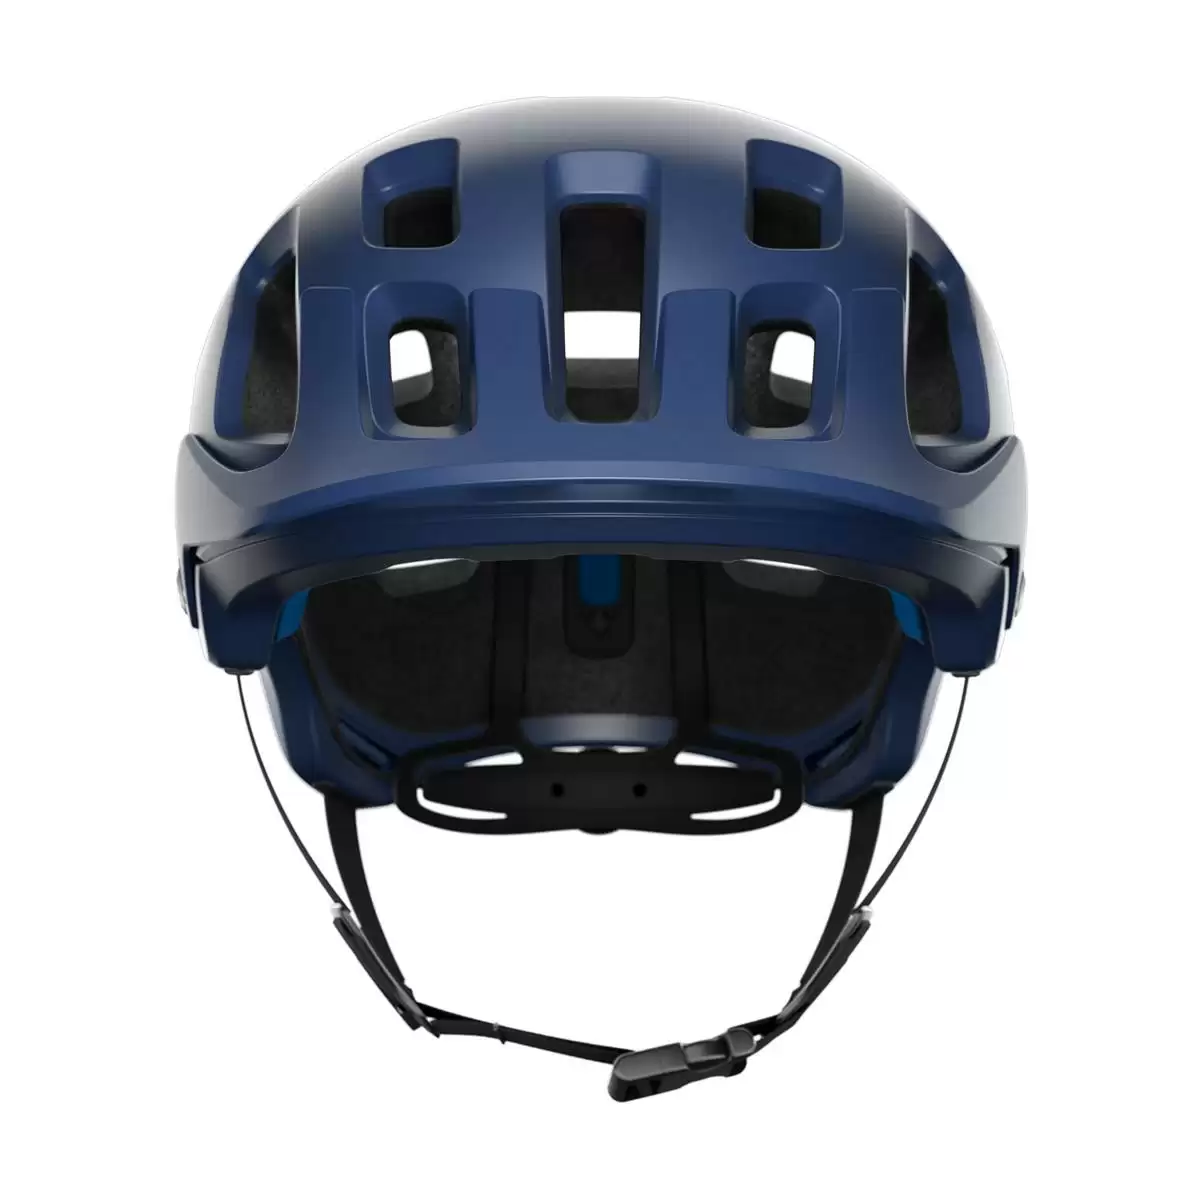 Enduro helmet Tectal Race Spin blue size XS-S (51-54cm) #1